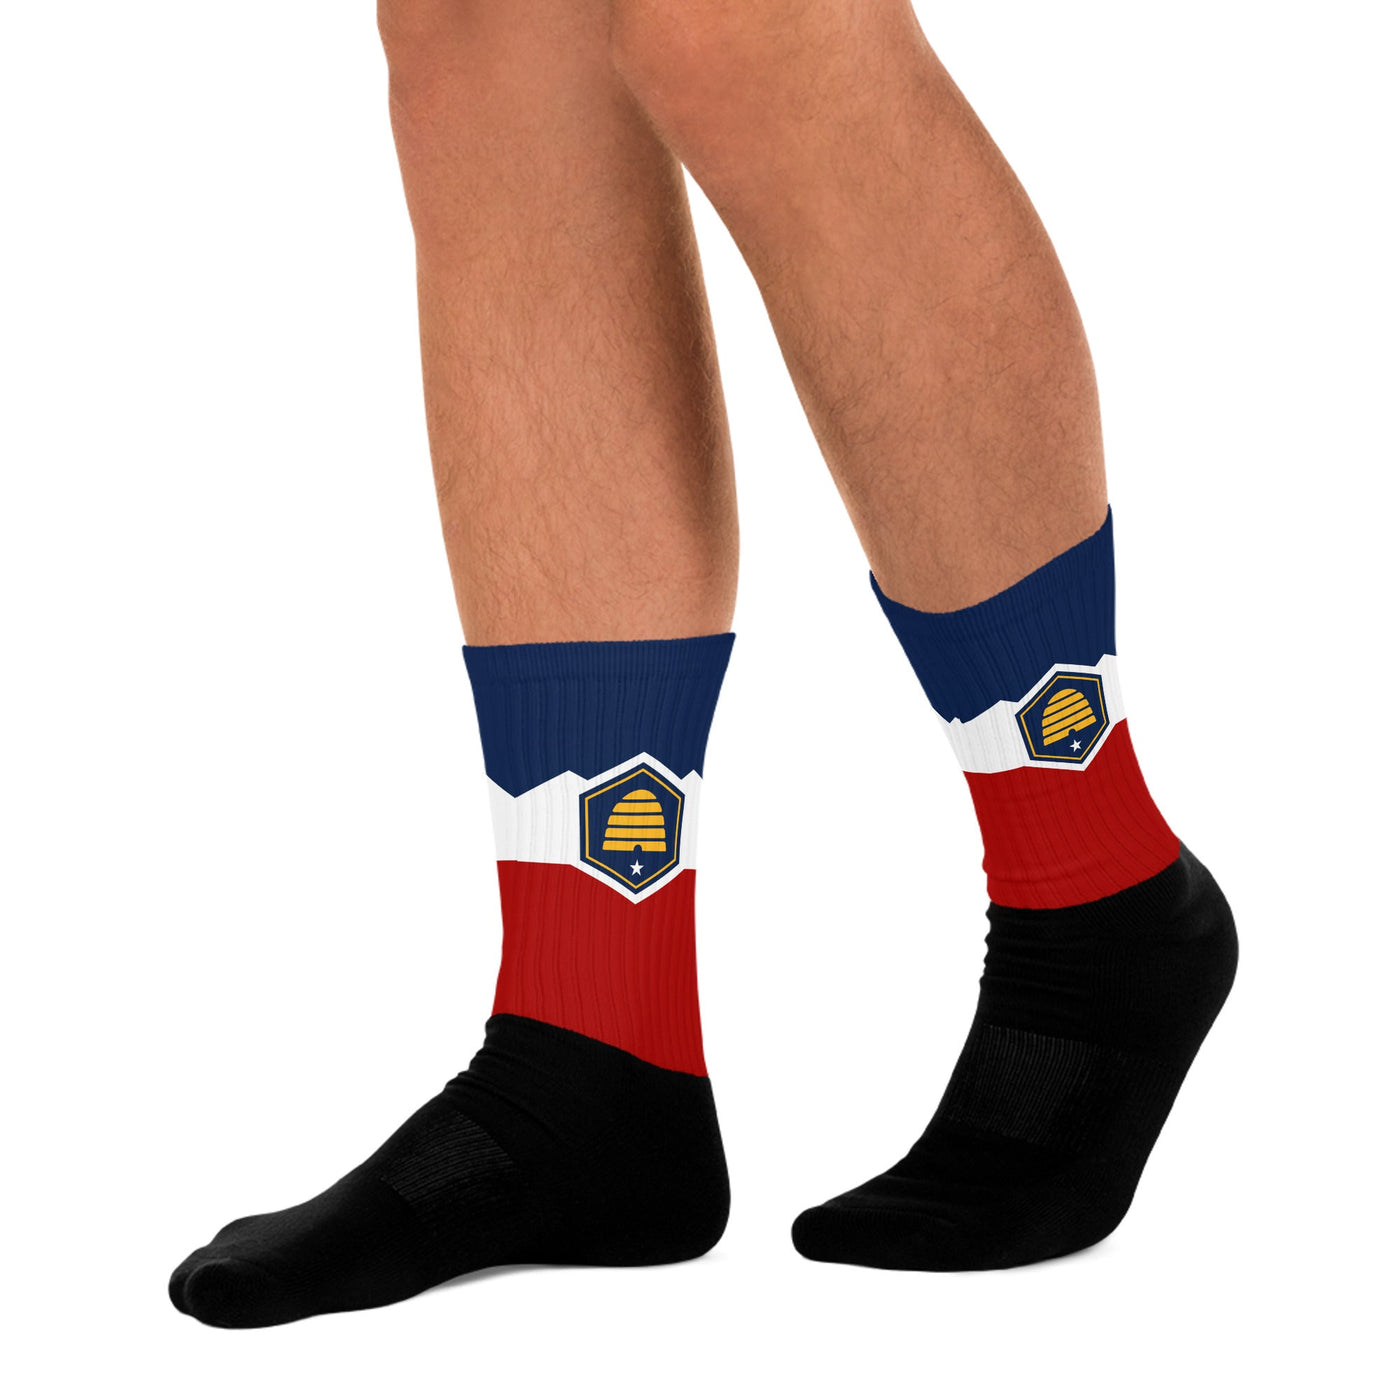 Utah Socks - Ezra's Clothing